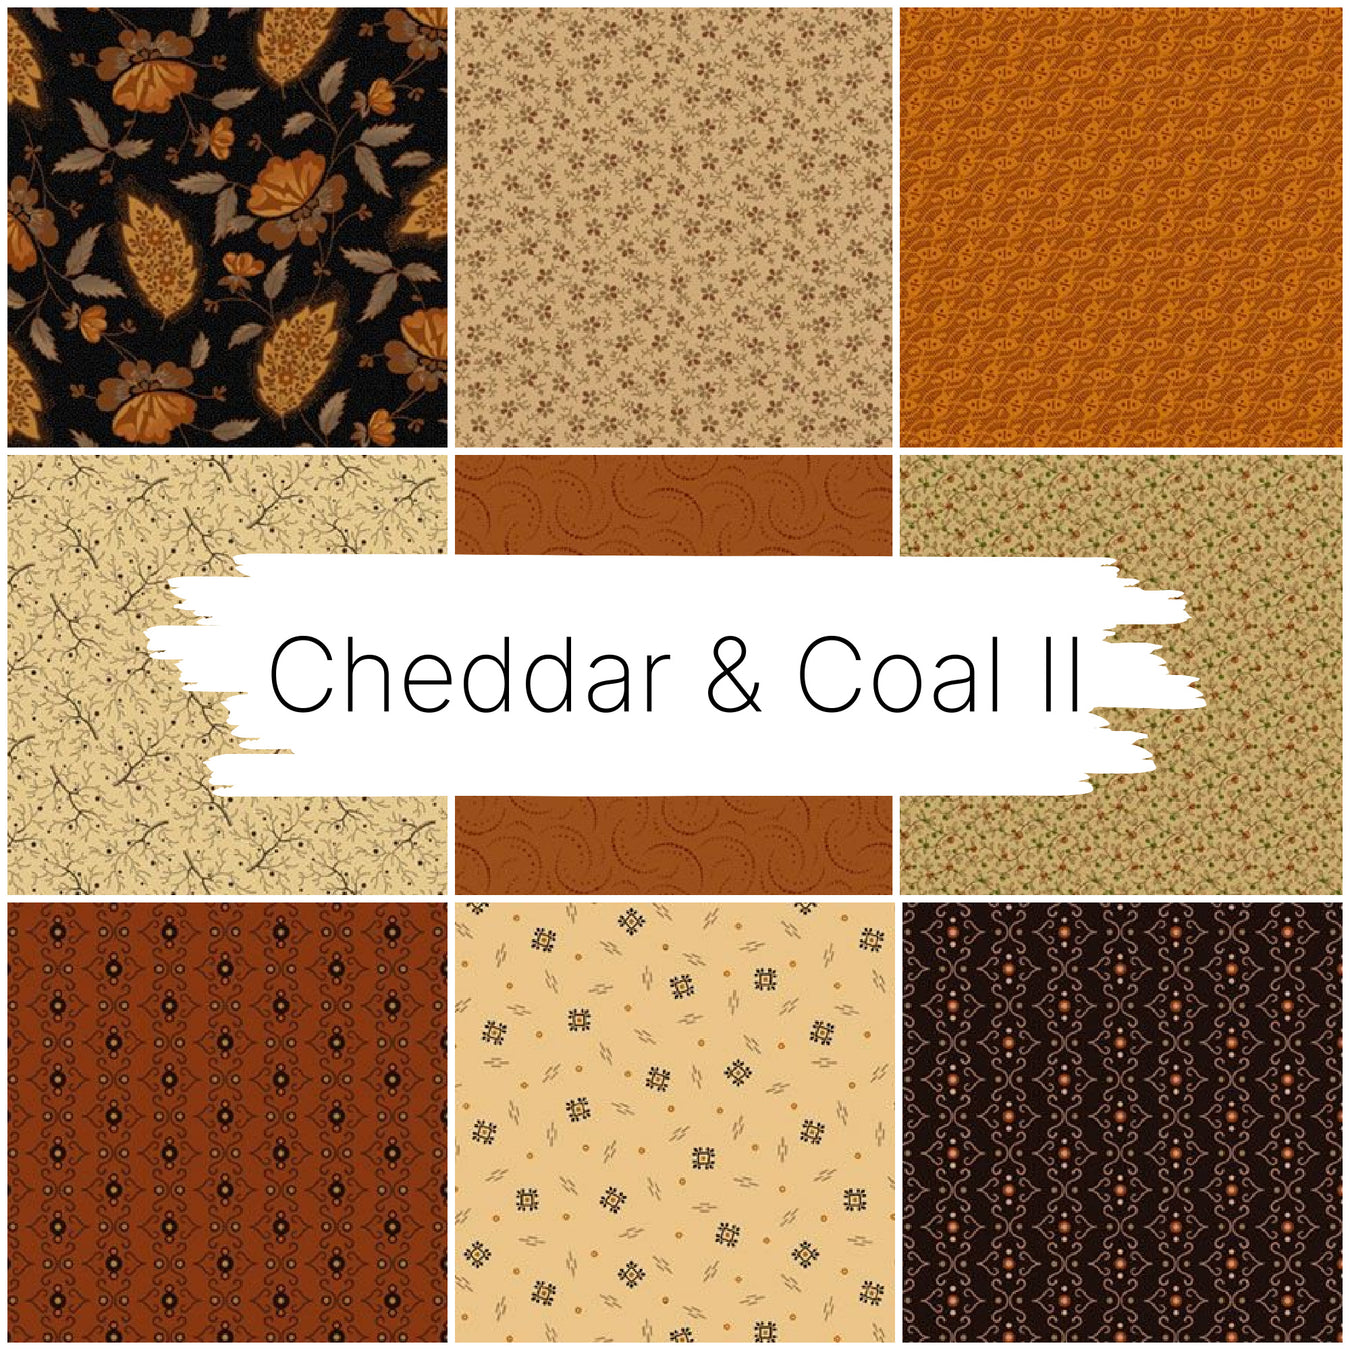 Cheddar & Coal II